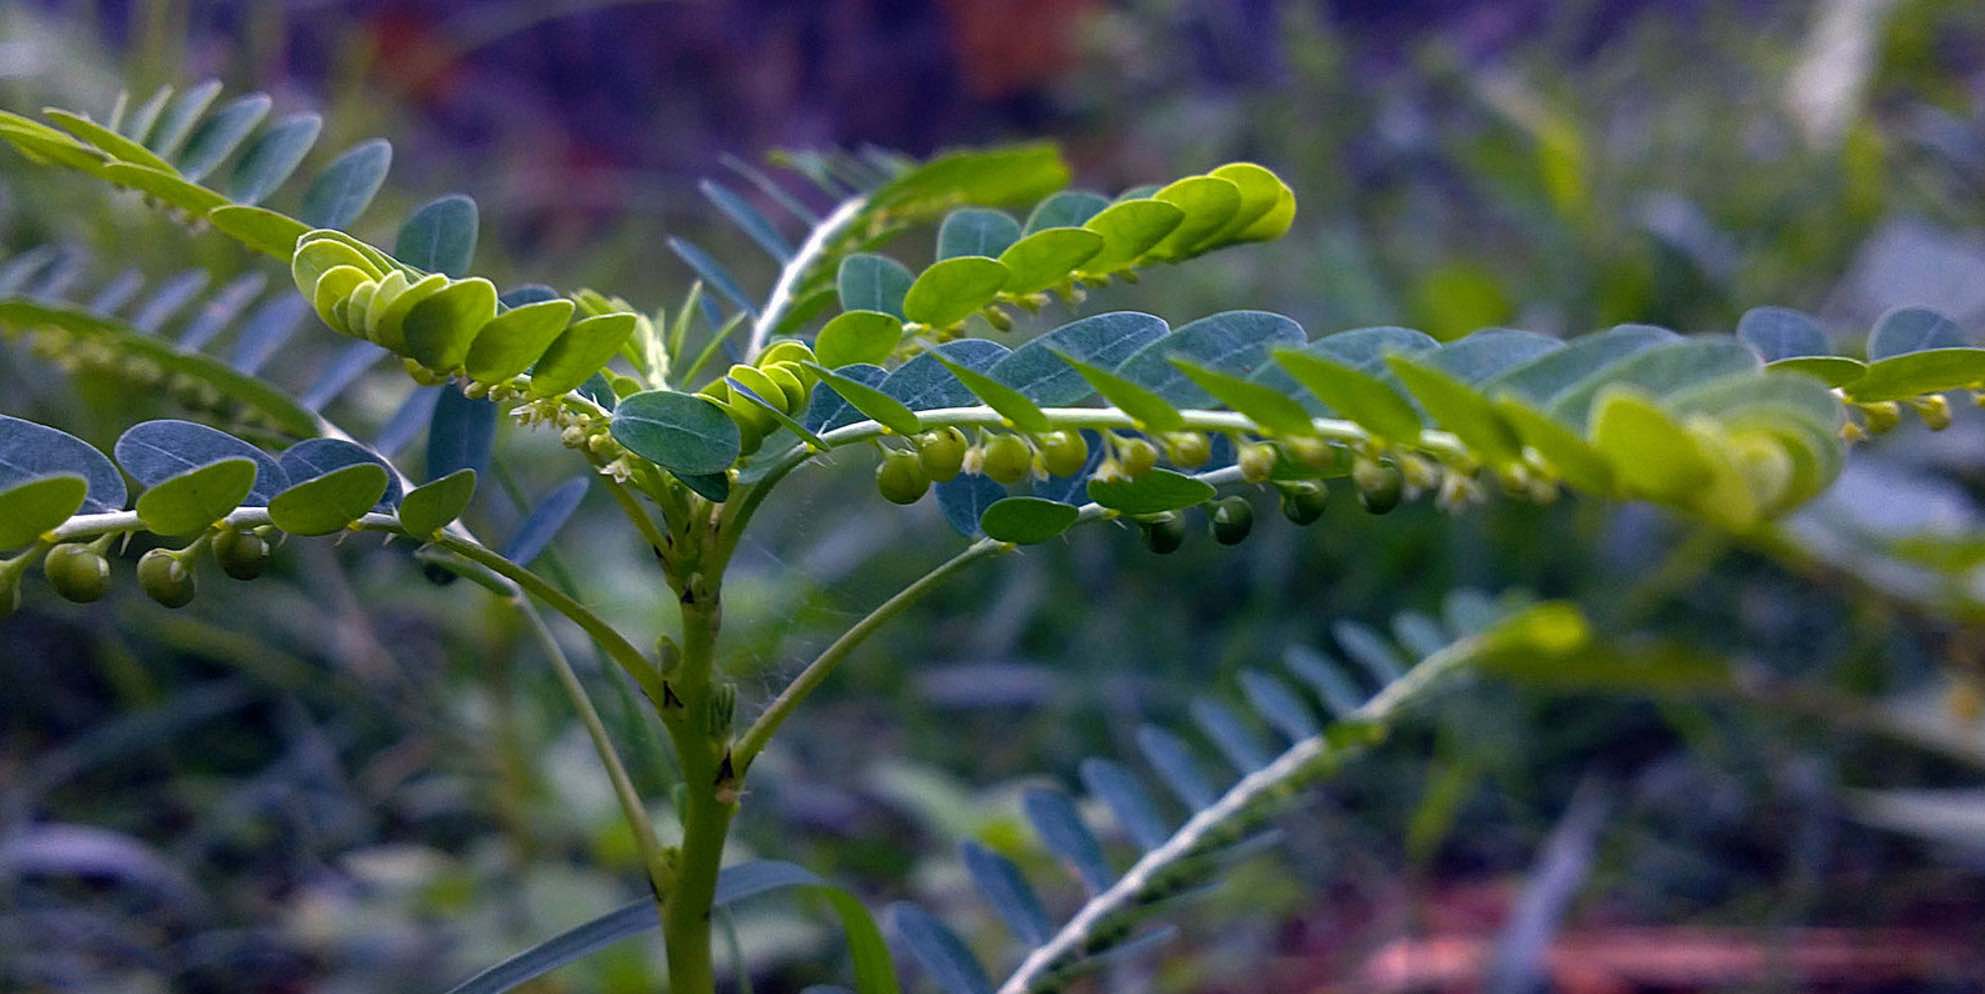 chanca piedra phyllanthus niruri peruvian intersections attracts herb attention international